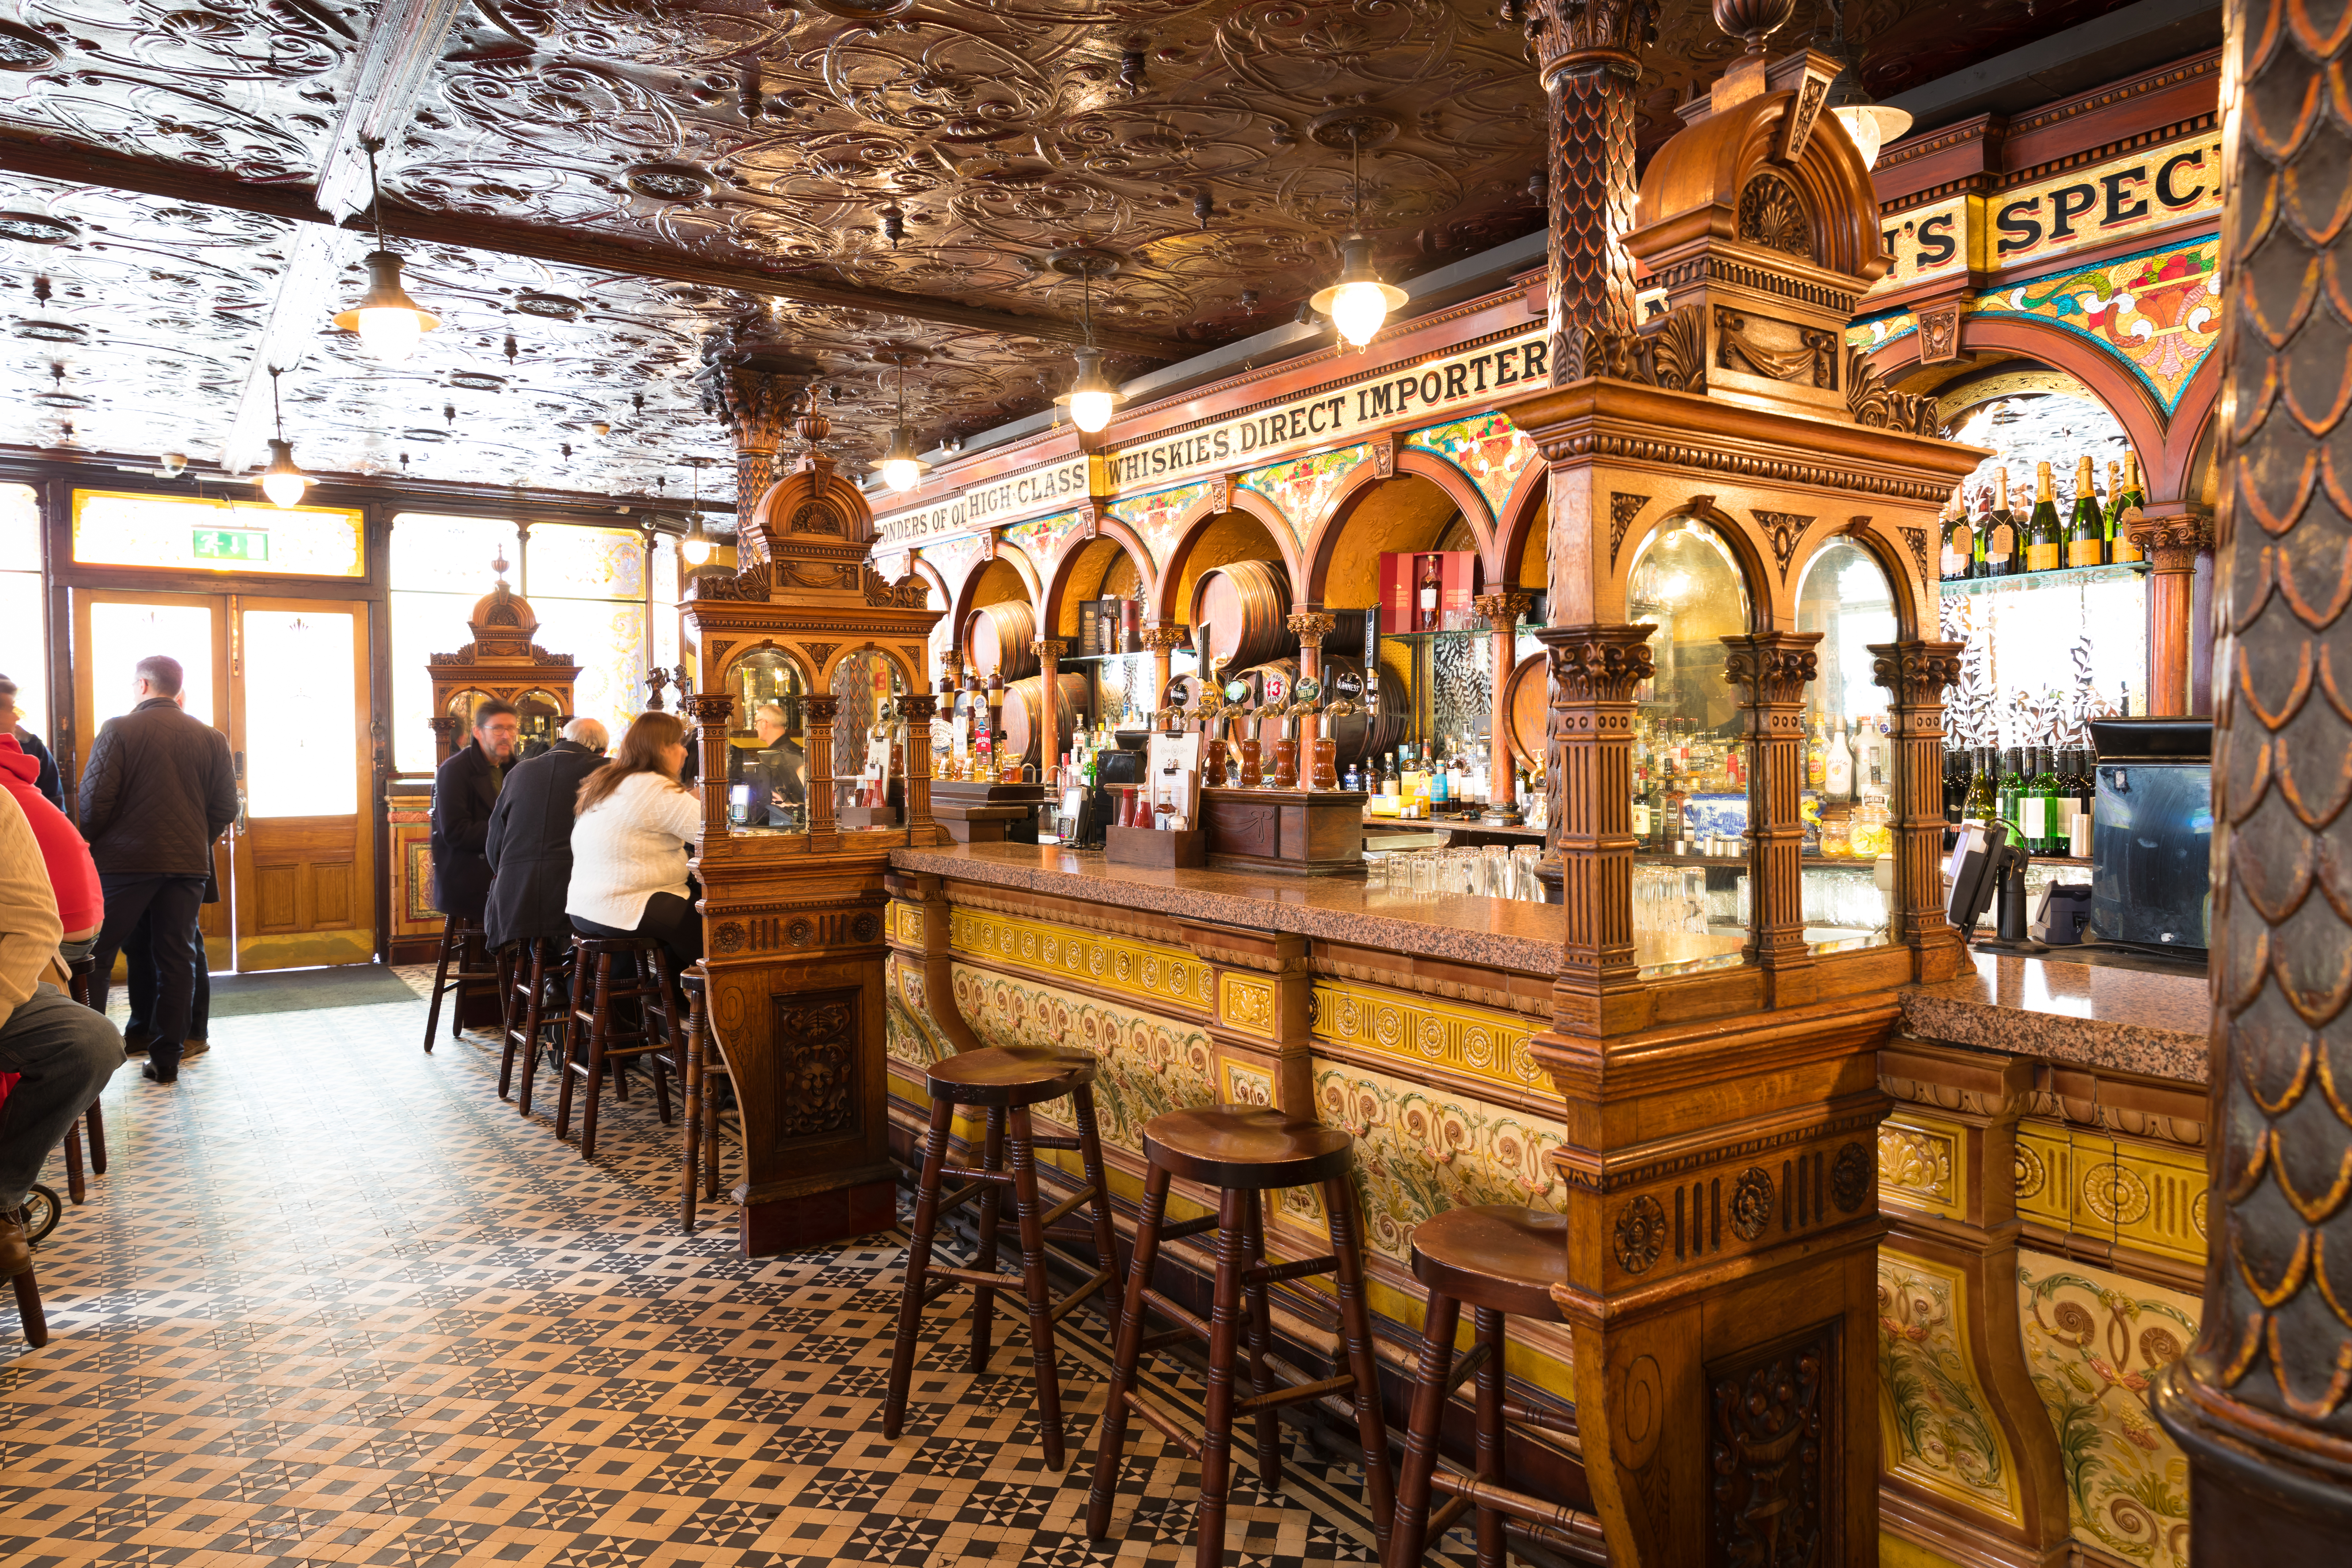 The historic Crown Liquor Saloon in Belfast, Northern Ireland